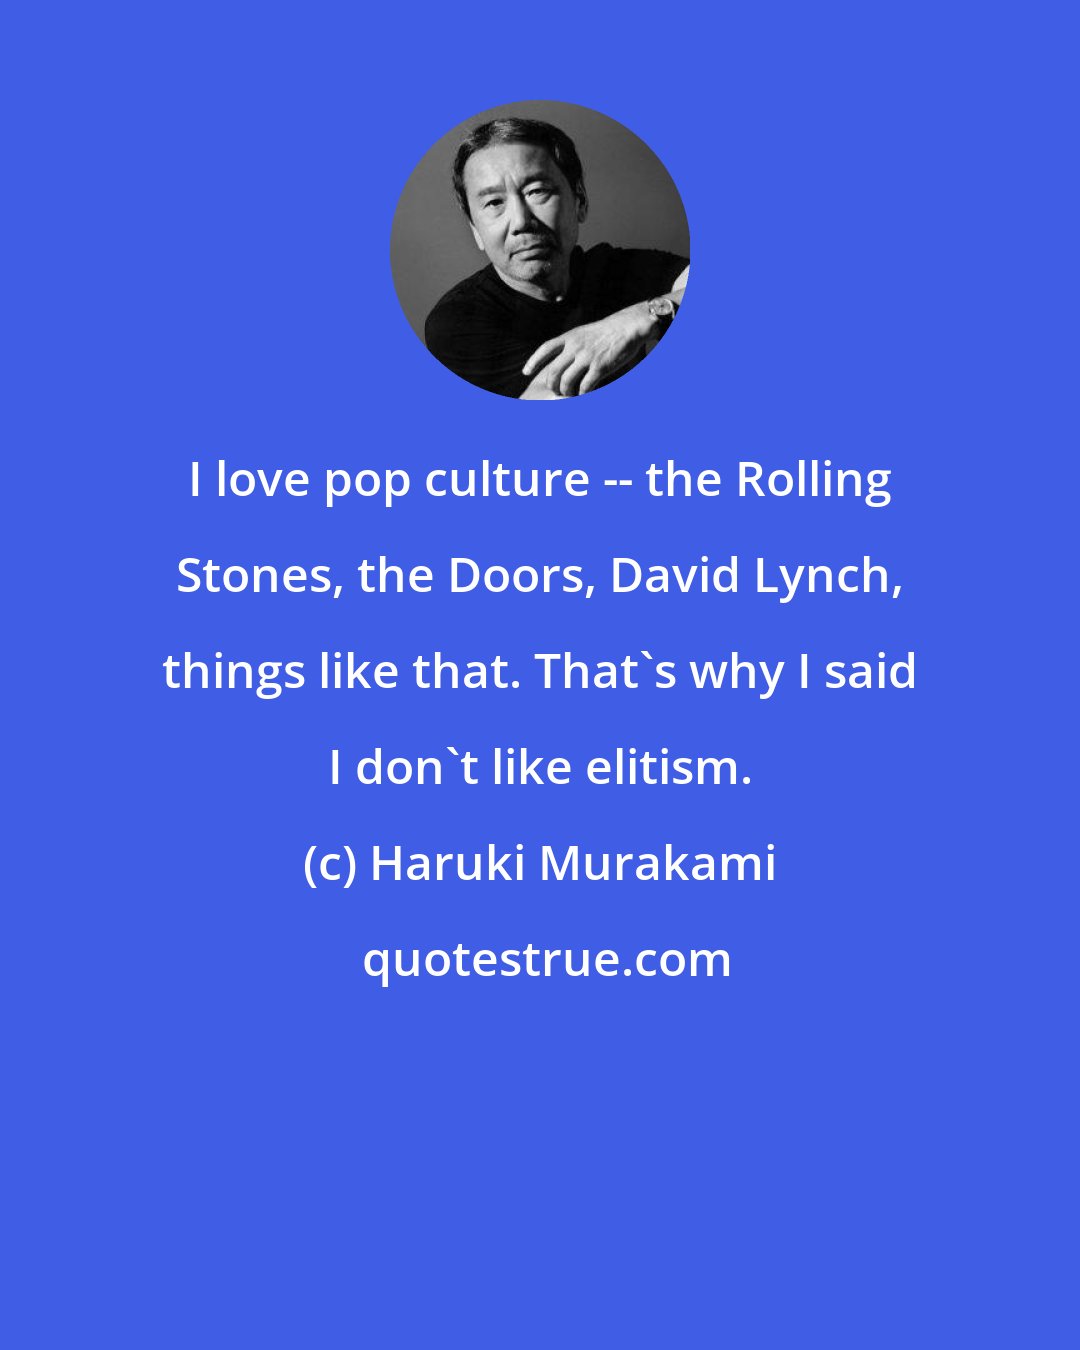 Haruki Murakami: I love pop culture -- the Rolling Stones, the Doors, David Lynch, things like that. That's why I said I don't like elitism.